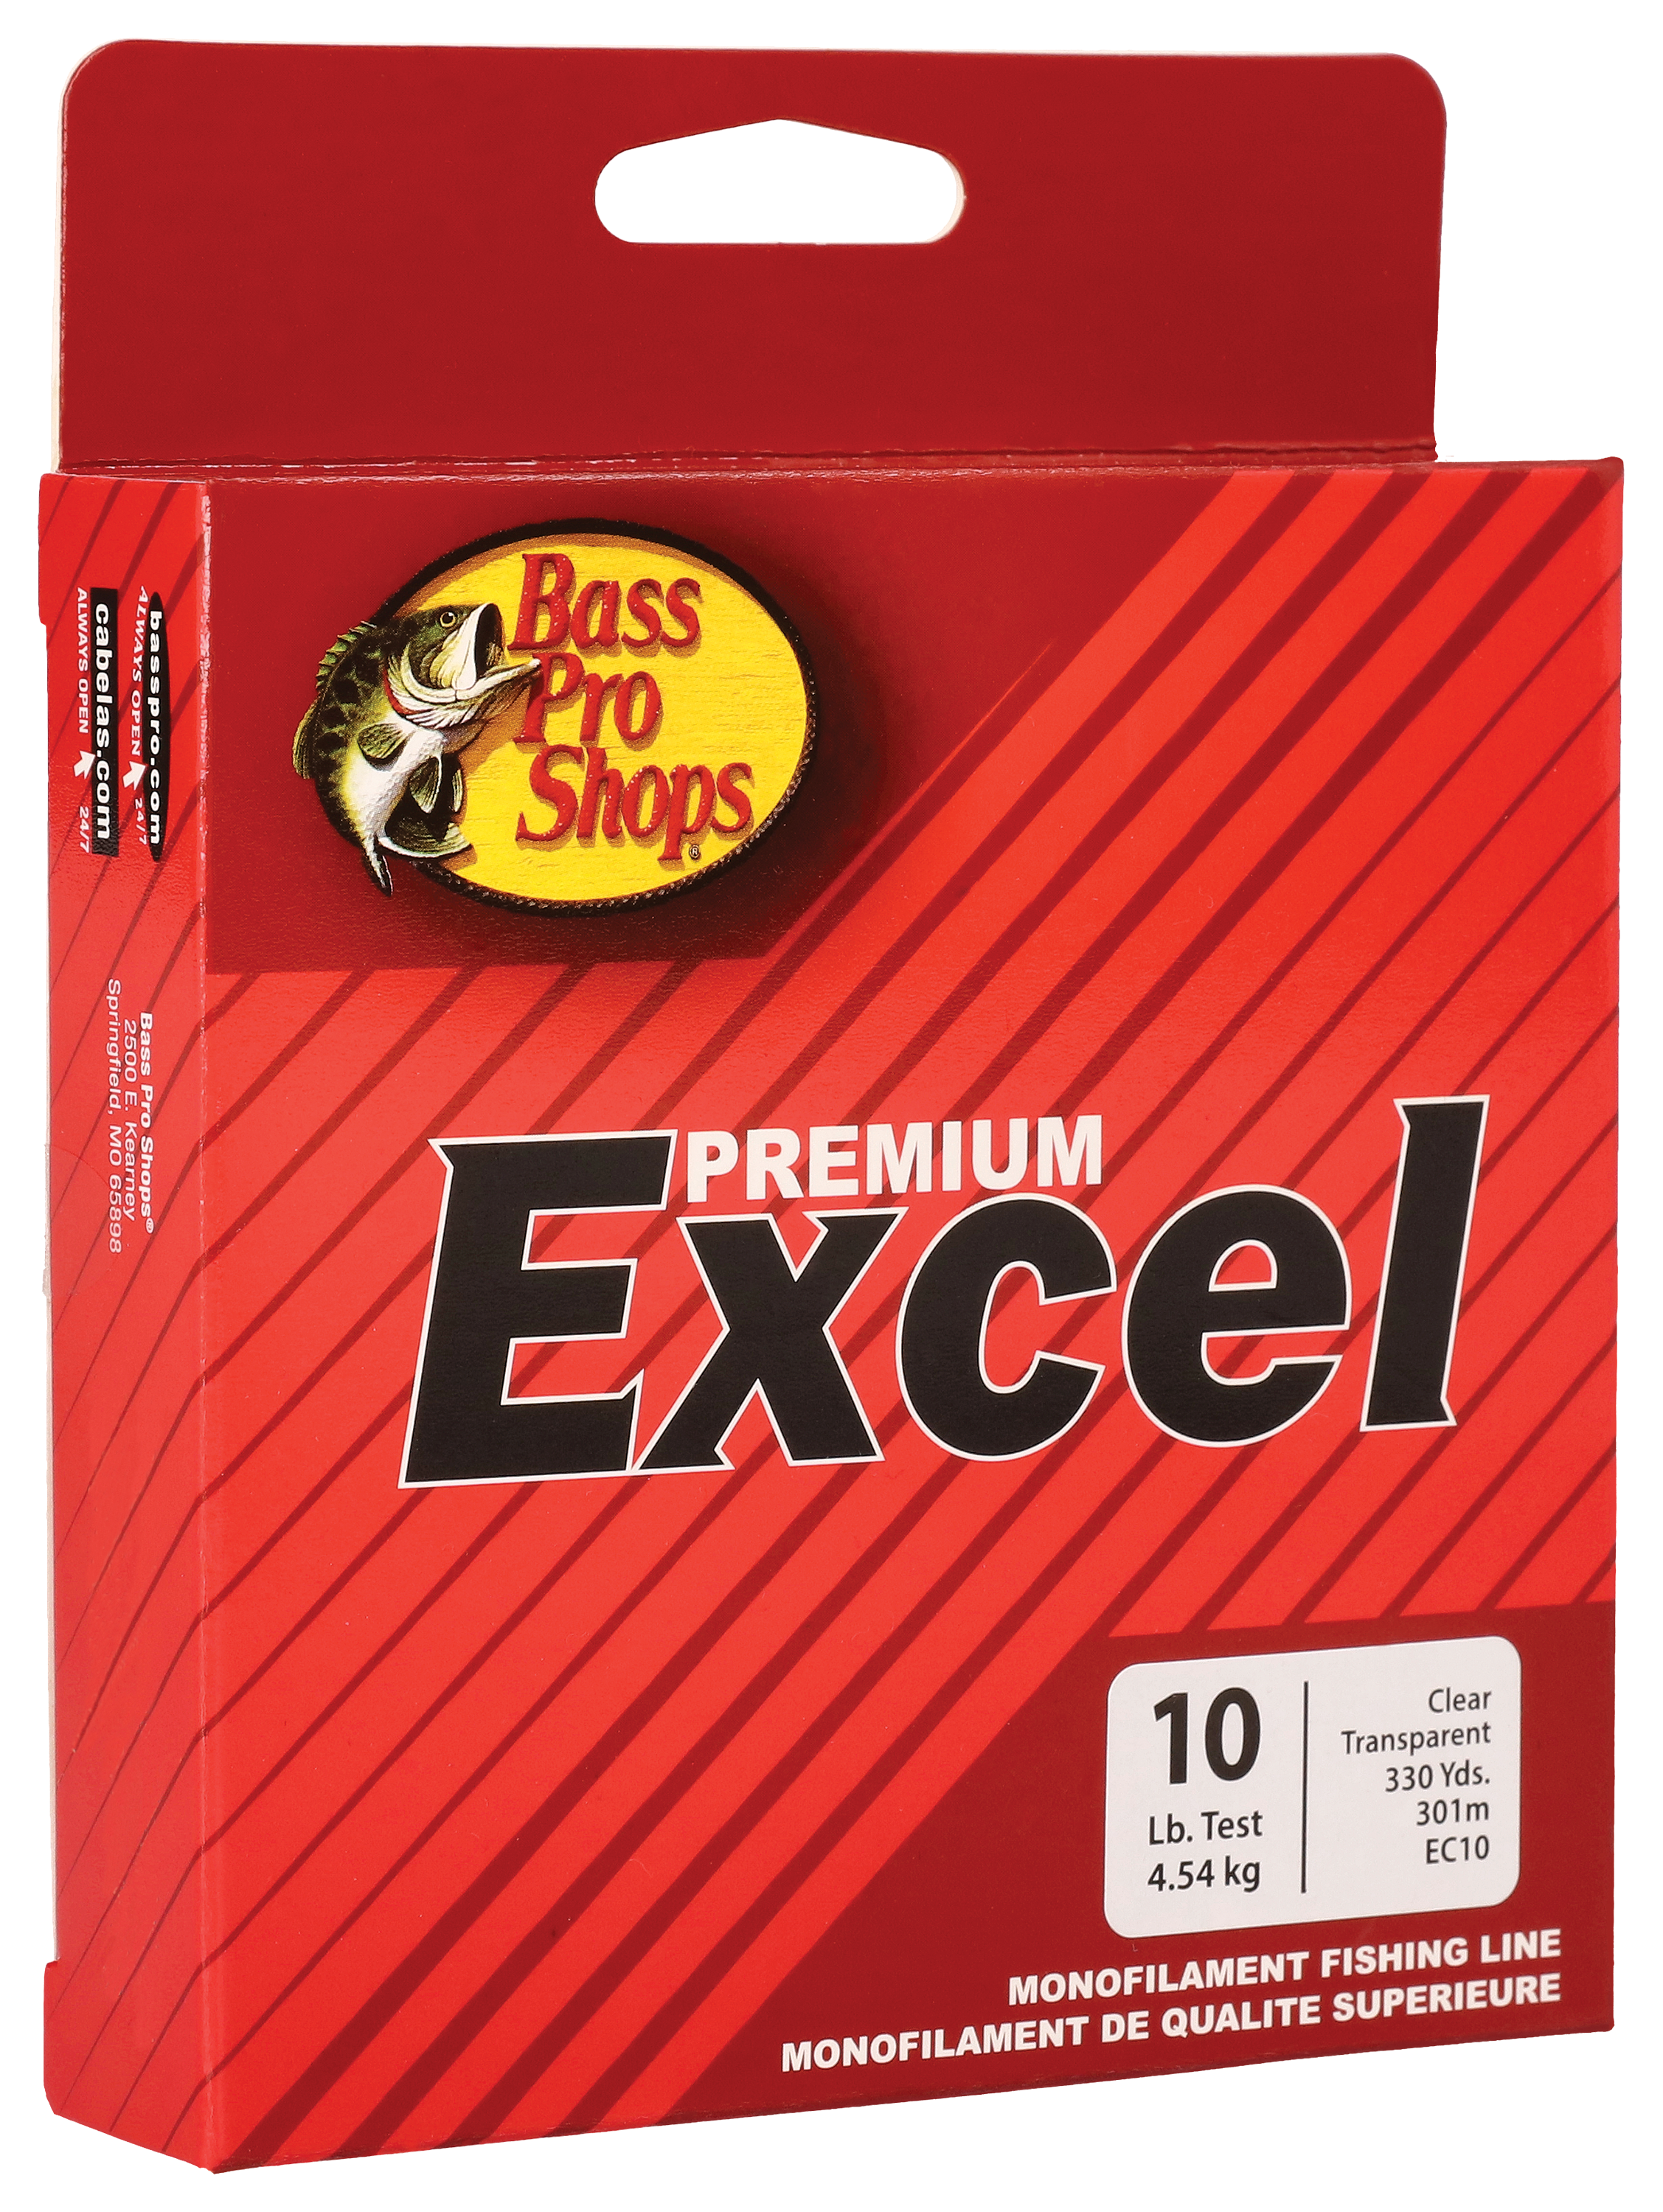 Bass Pro Shops Premium Excel Monofilamento